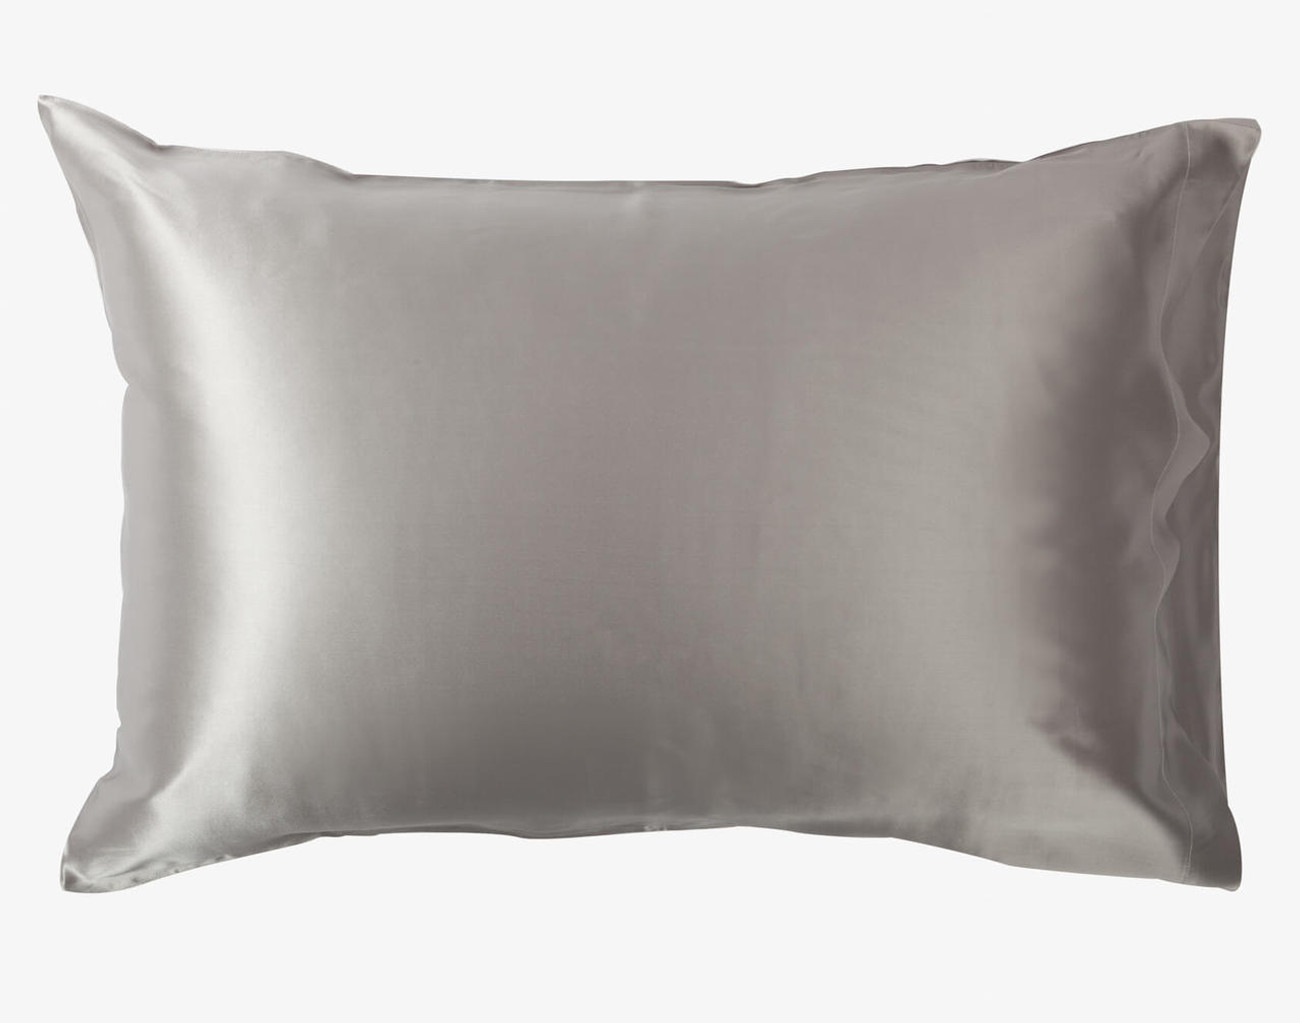 100% Mulberry Silk Pillowcase - Silver